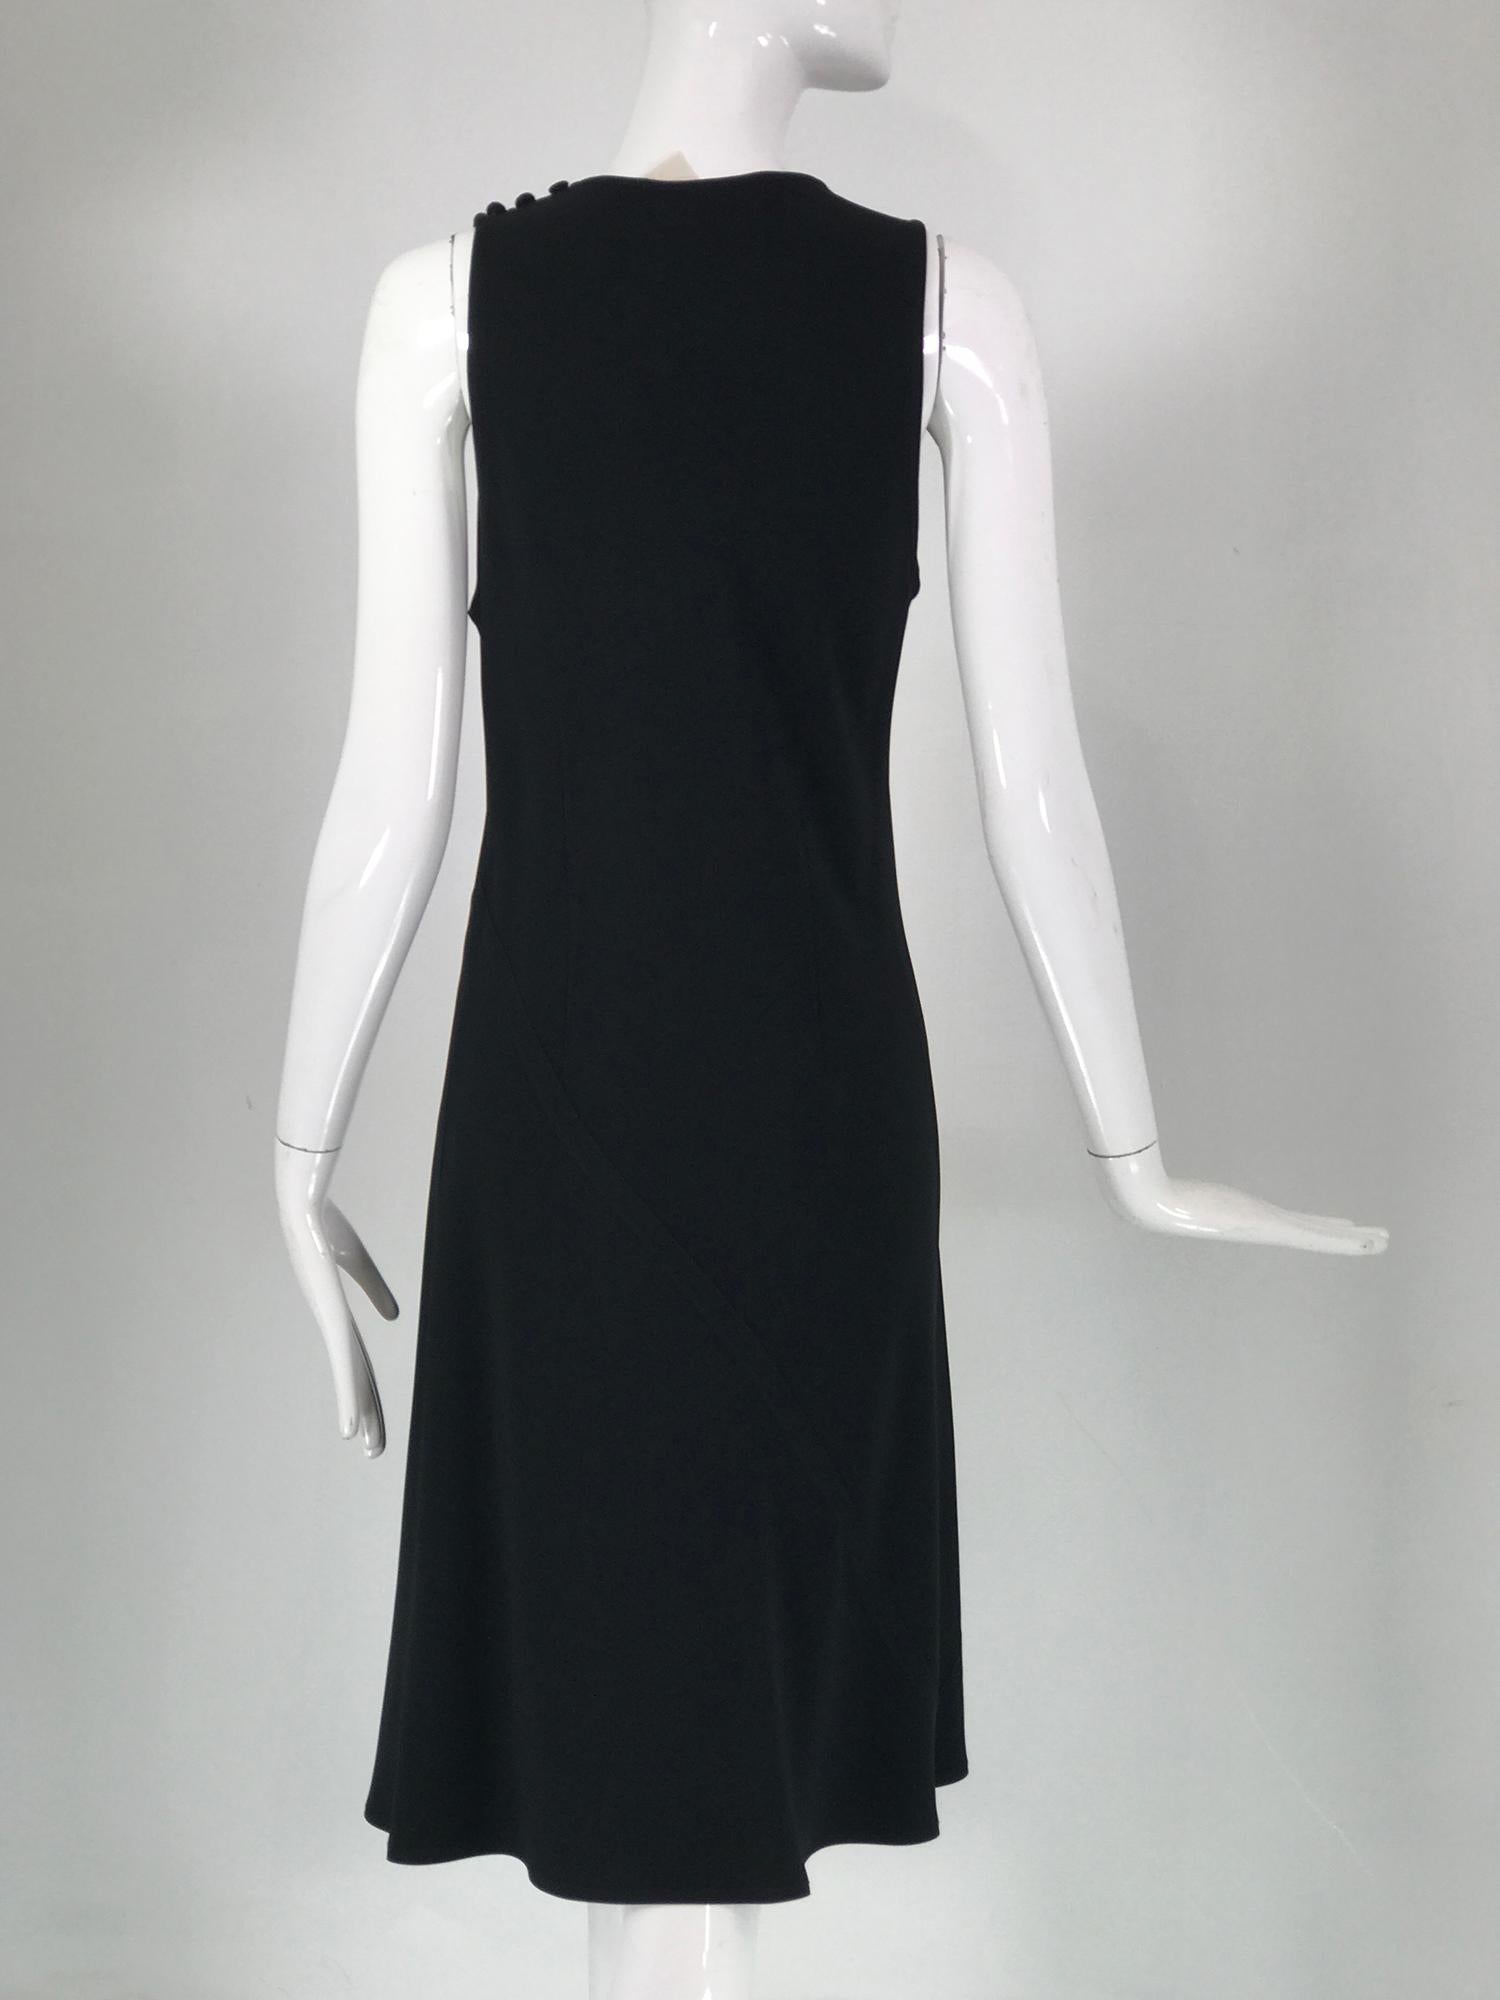 Sonia Rykiel Black Satin Backed Crepe Bias Cut Sleeveless Dress  1